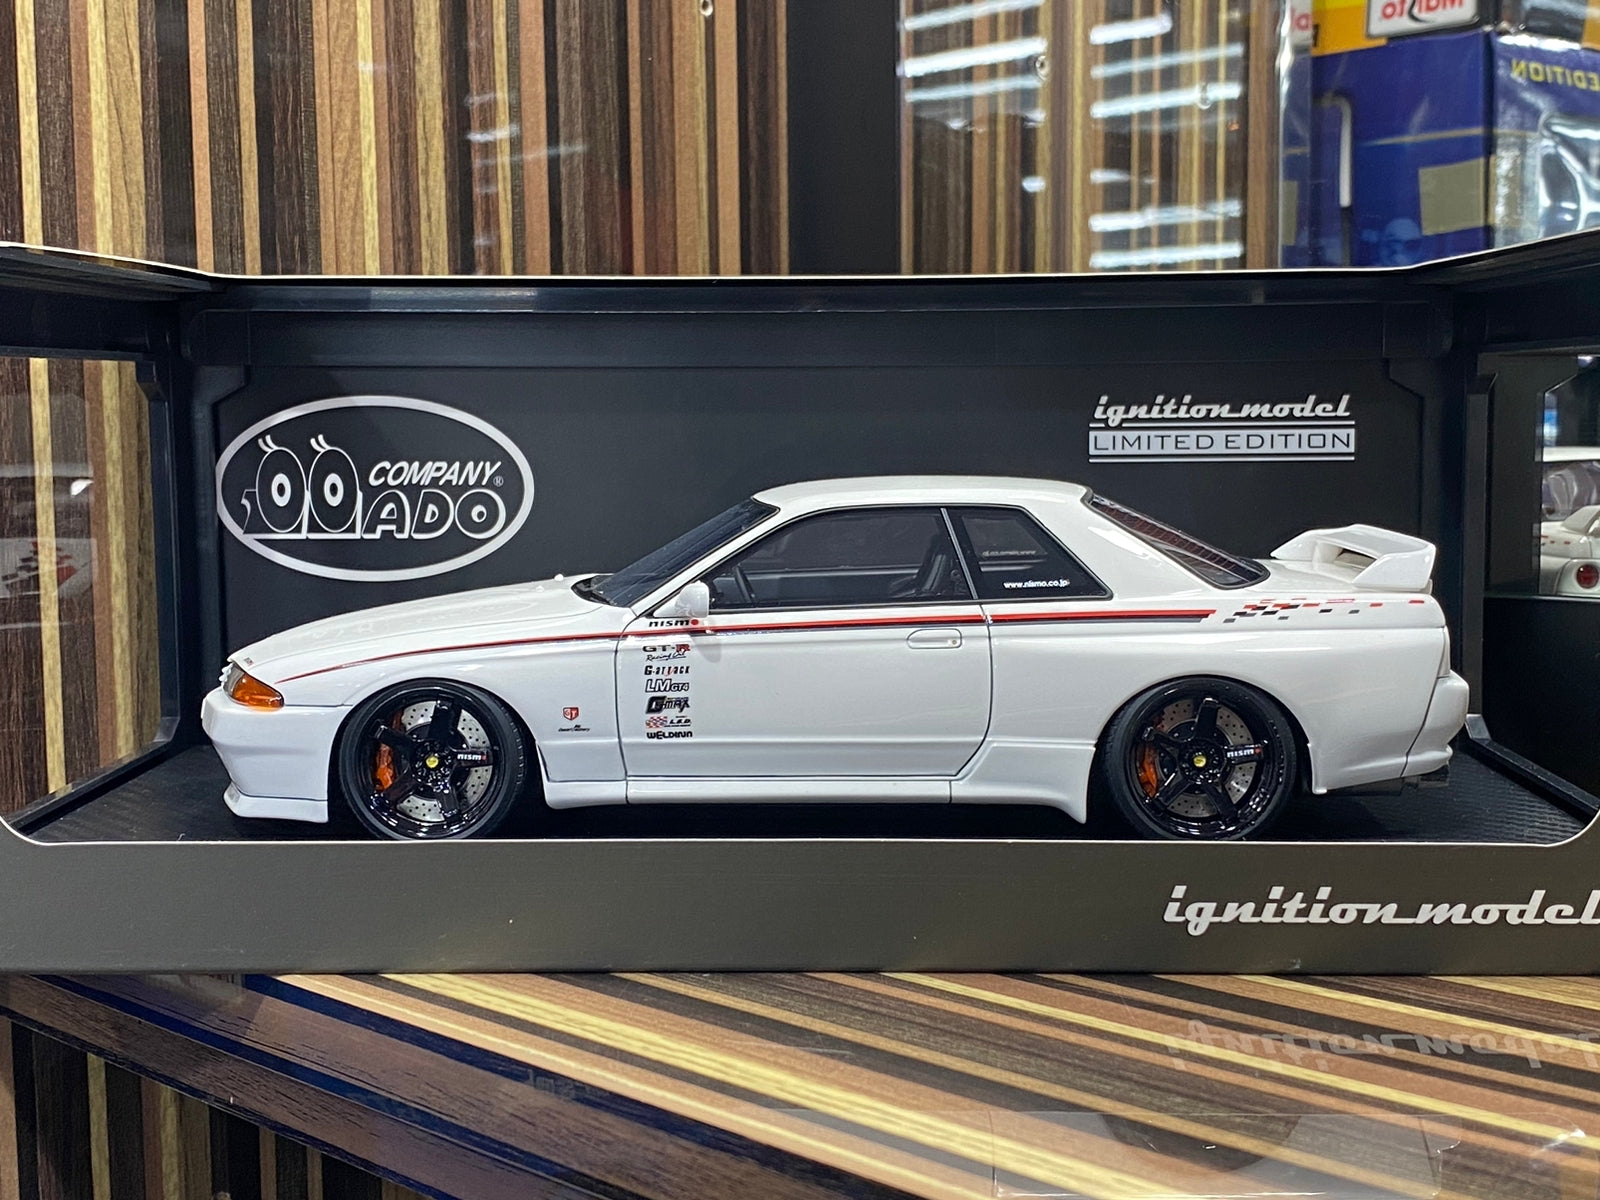 1/18 Diecast Nissan Skyline GT-R R32 White Ignition model Miniature Car